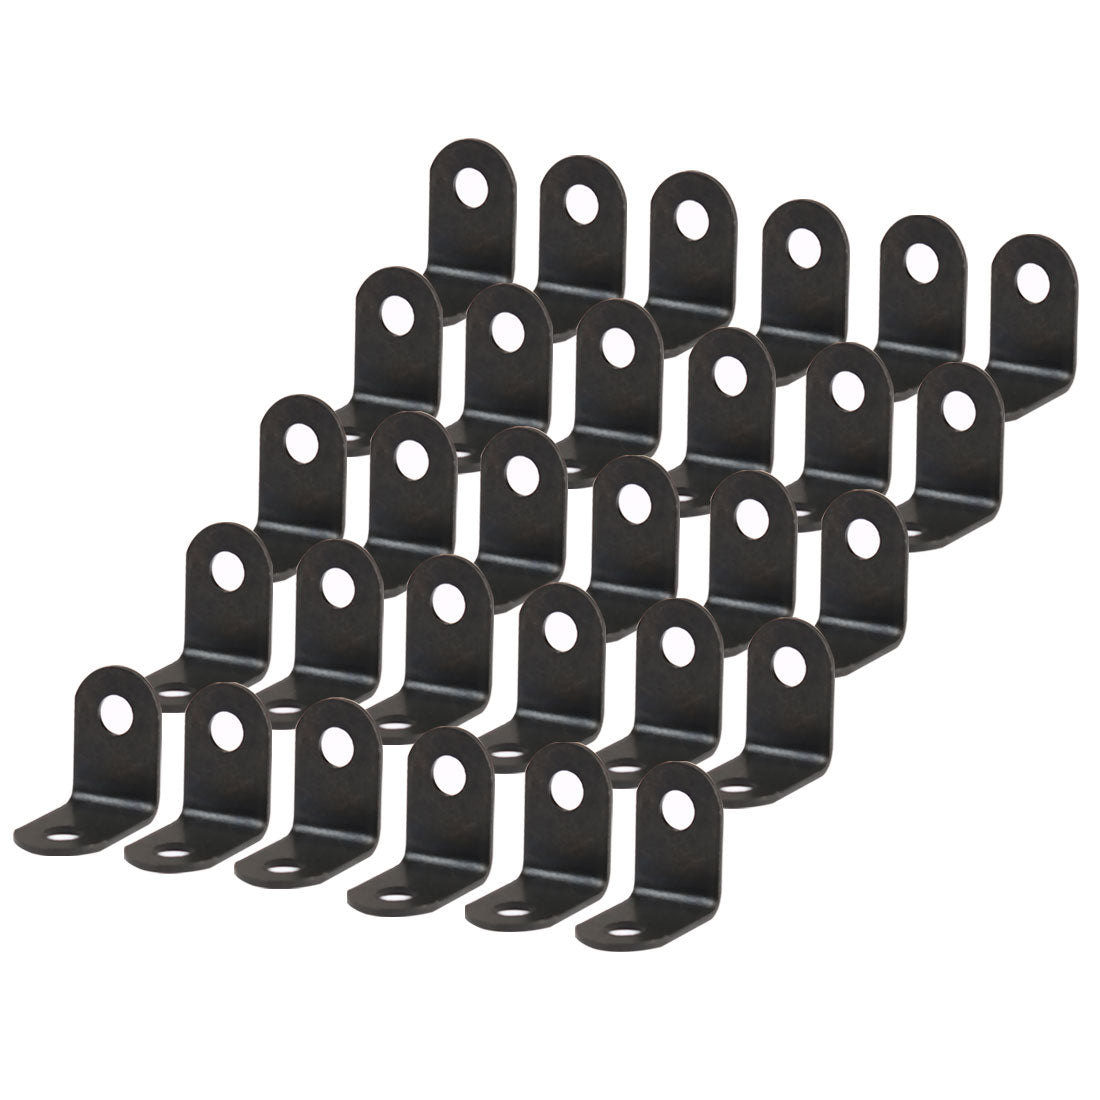 uxcell Uxcell Angle Bracket Metal Black Brace Fastener Shelf Support w Screws 12 x 12mm, 30pcs